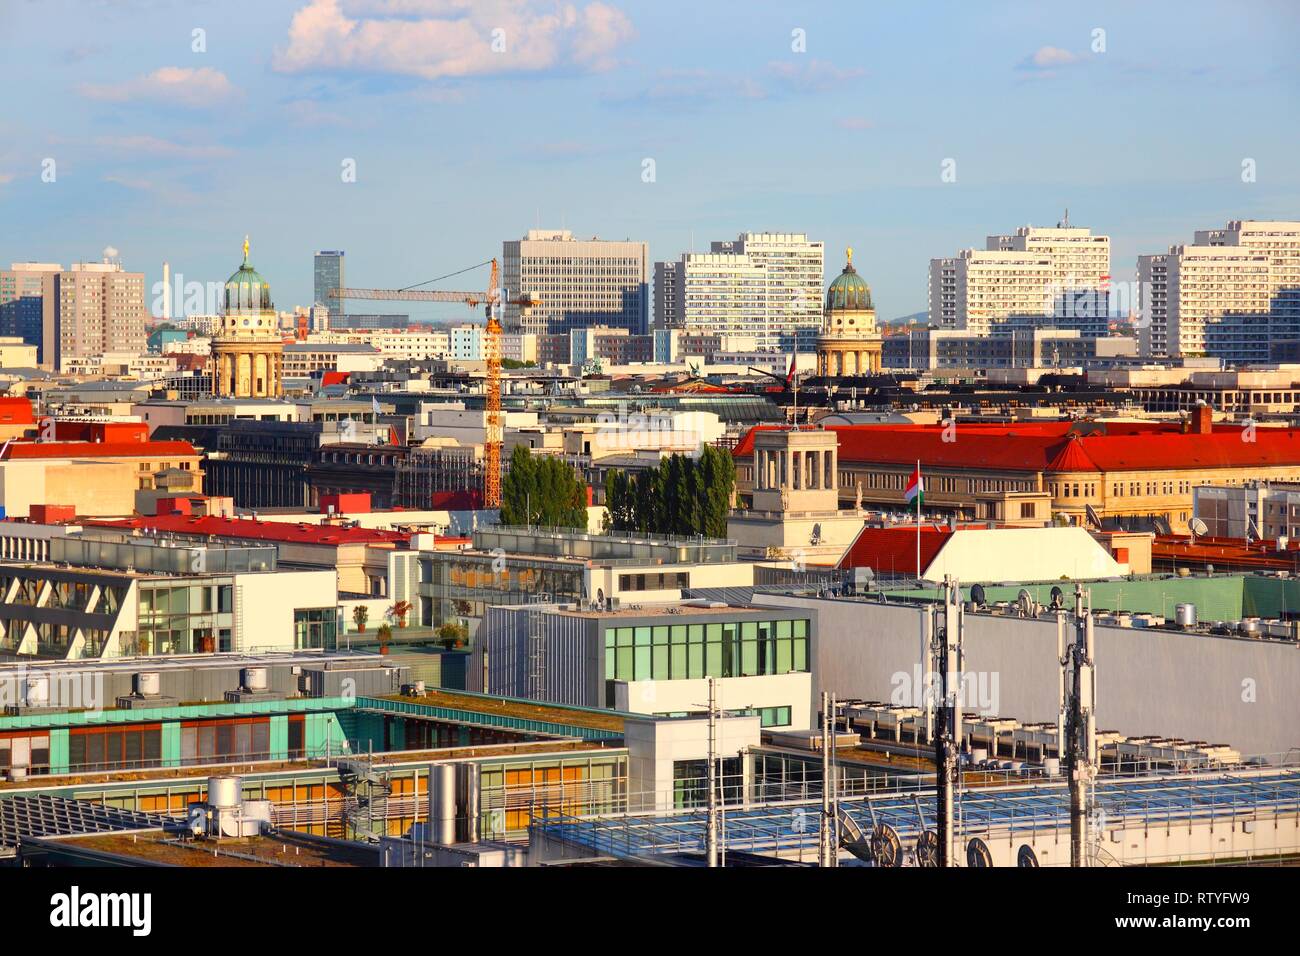 Berlin city skyline - Germany capital city architecture. Stock Photo